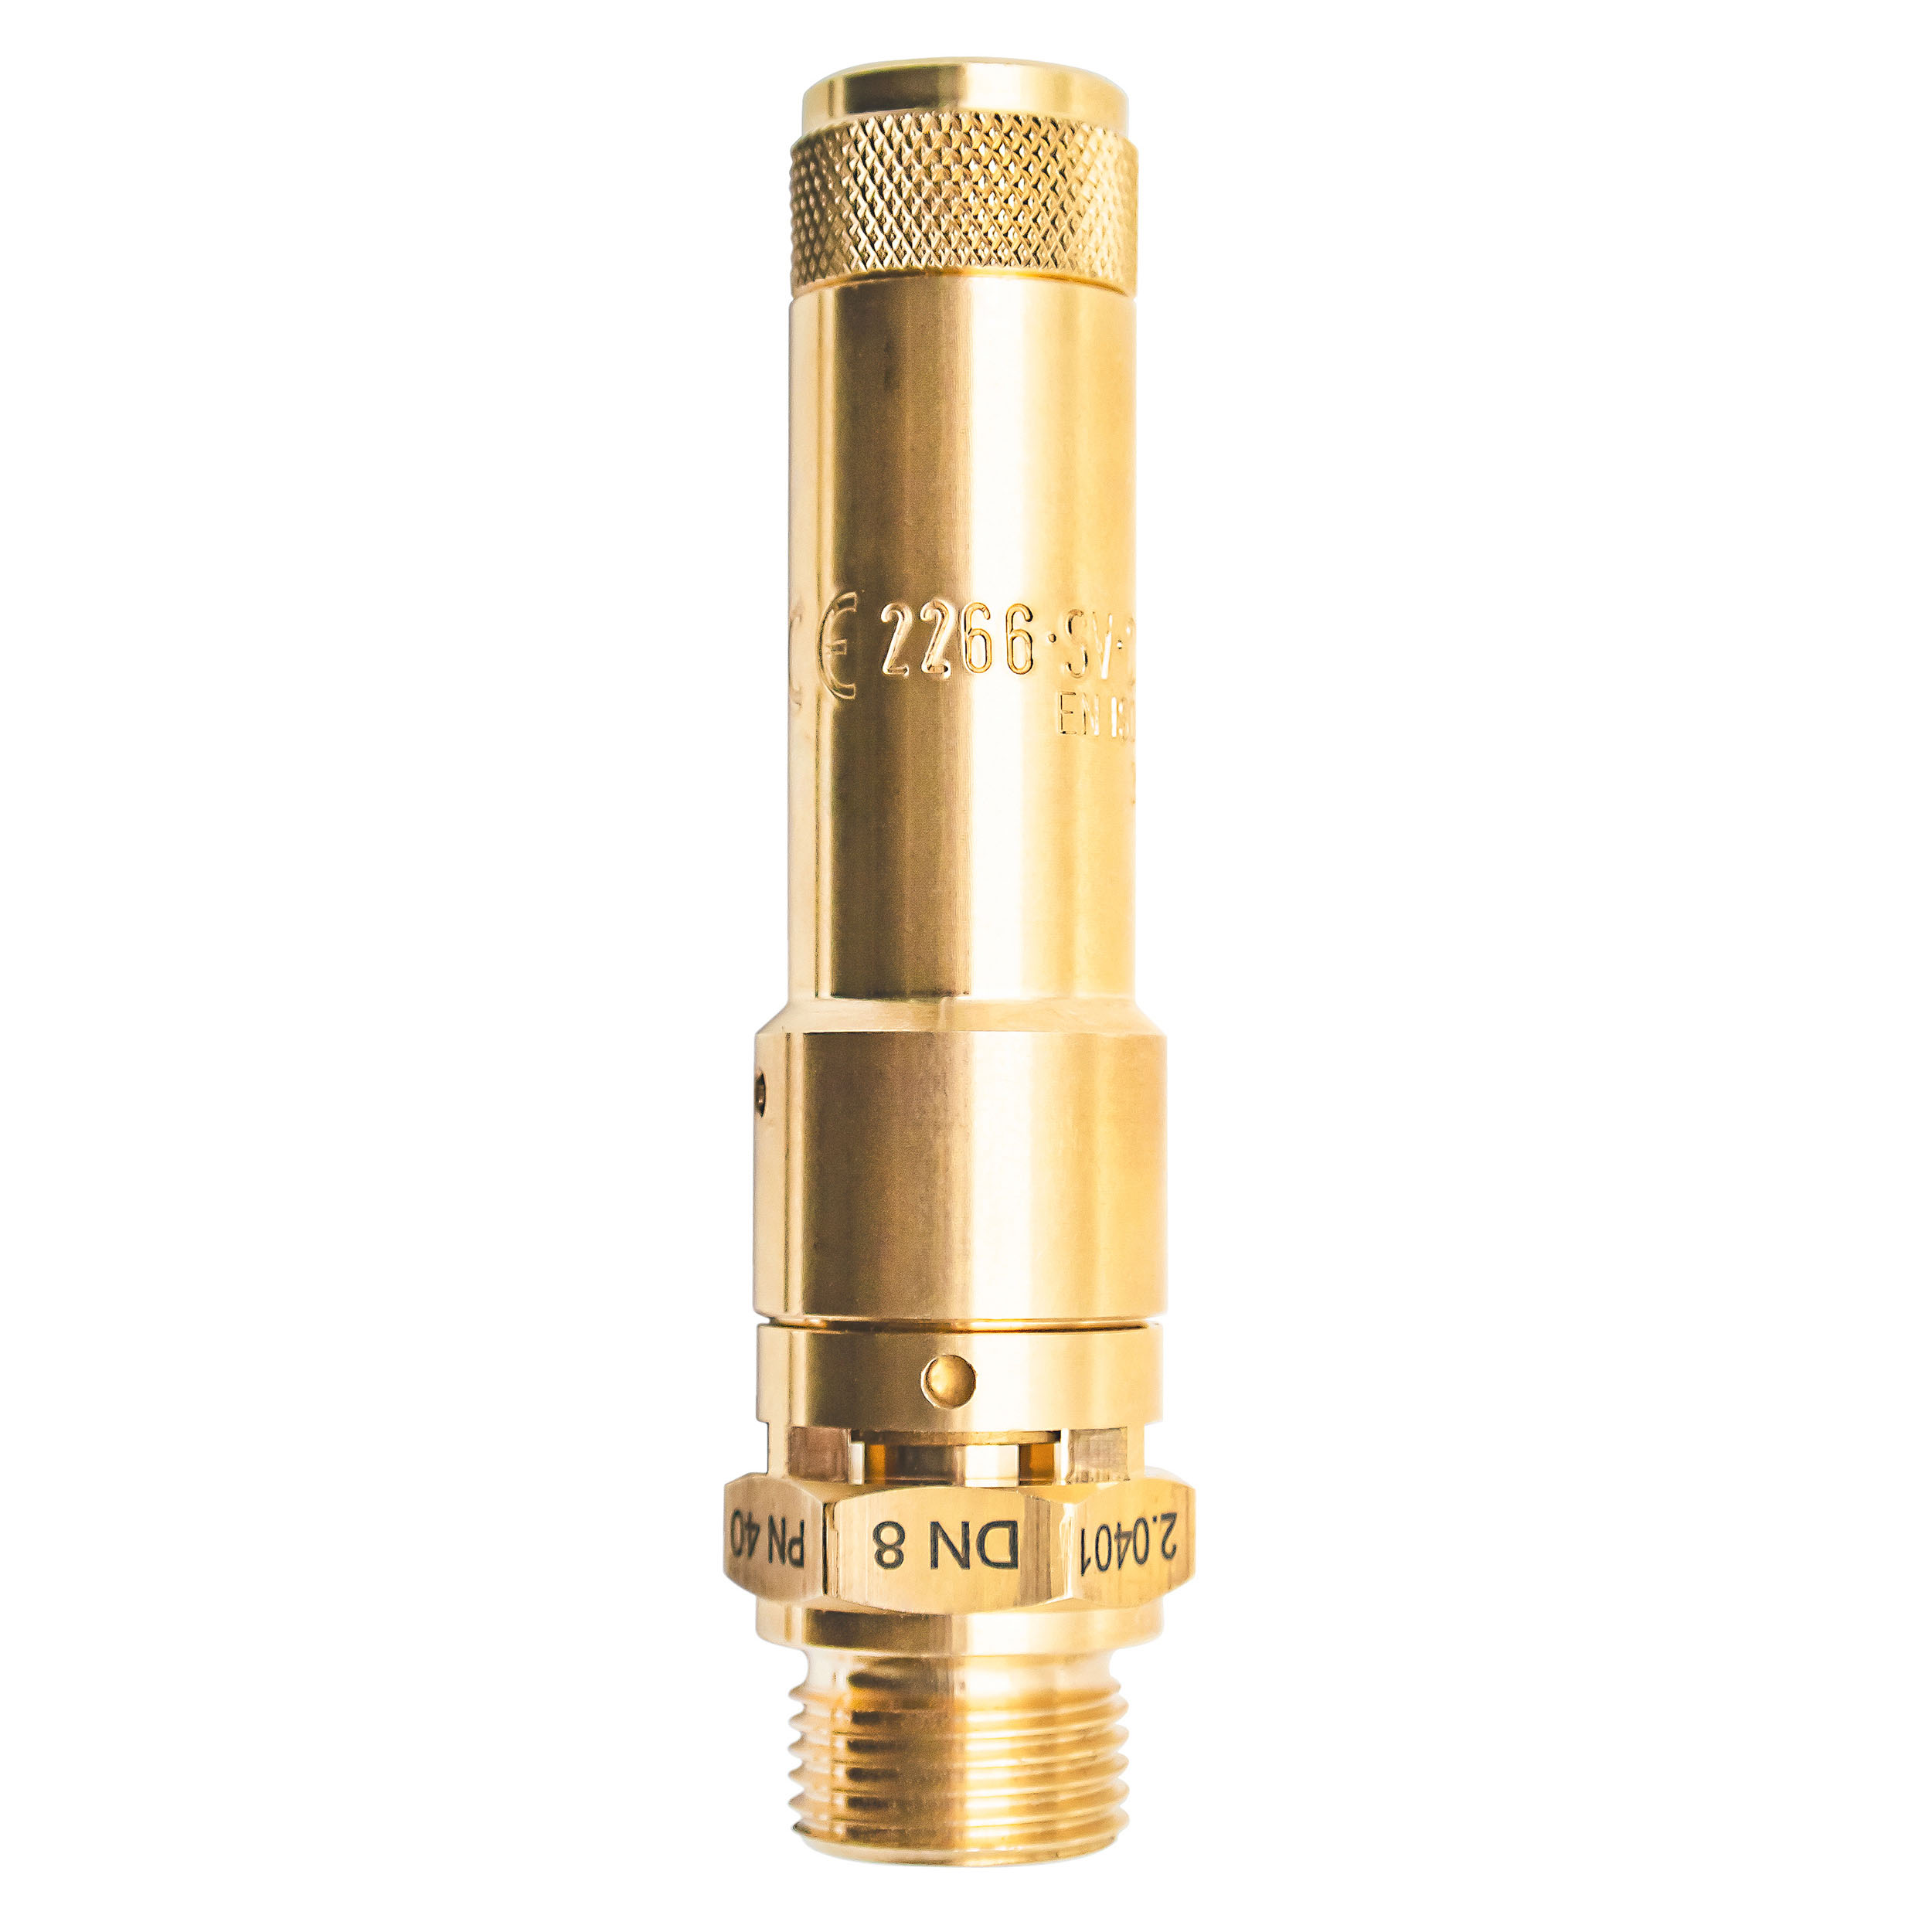 Savety valve component tested DN 8, G¼, set pressure: 2.0 bar (29 psi)